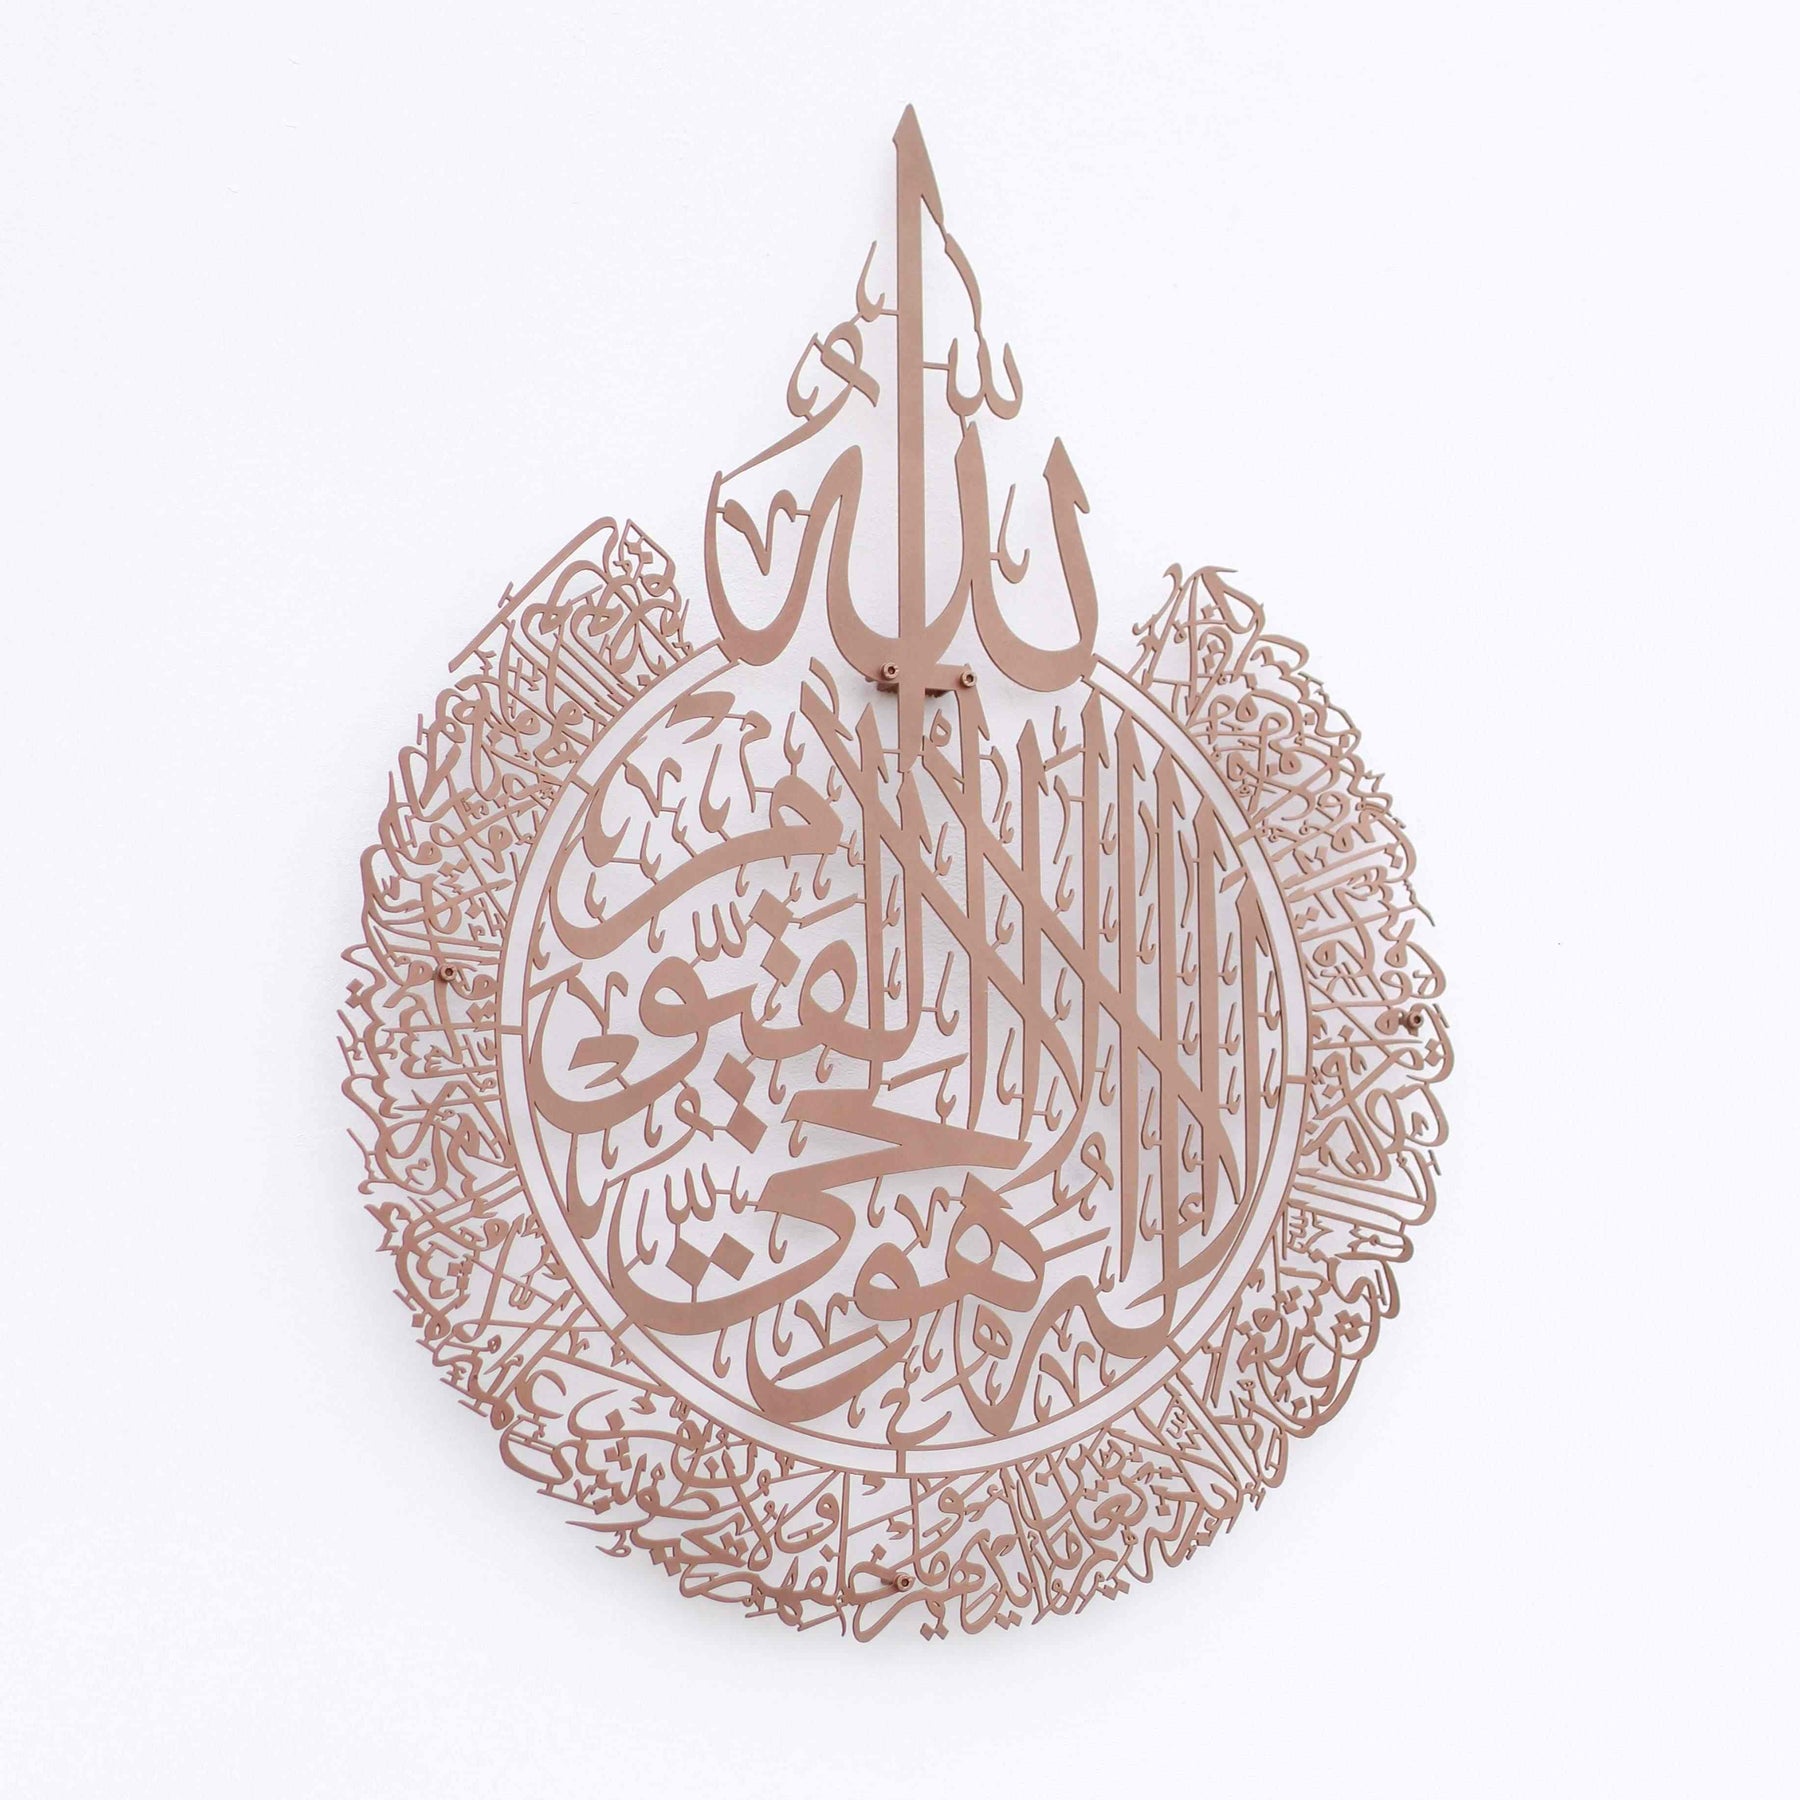 Tableau Calligraphie Coran Al Falaq